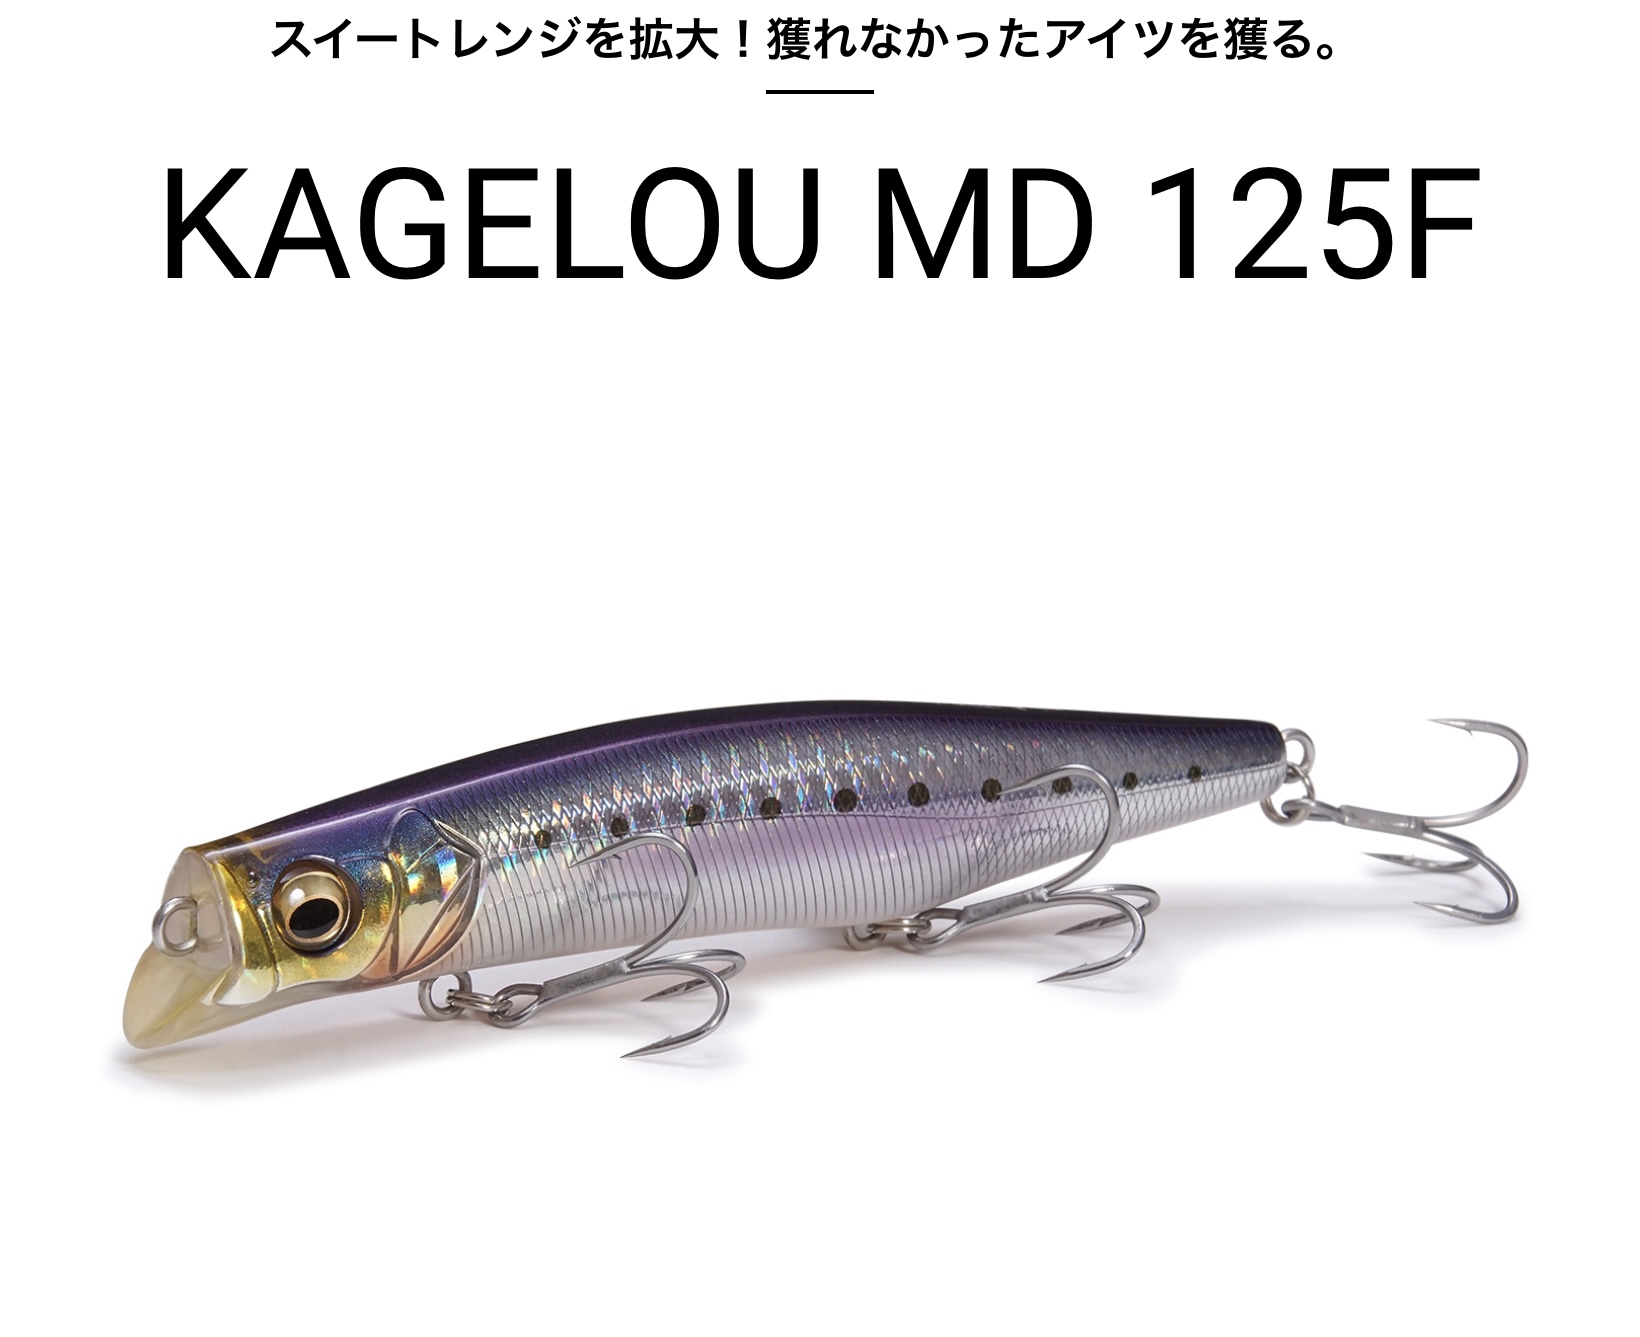 KAGELOU MD 125F GGキンボラの商品画像